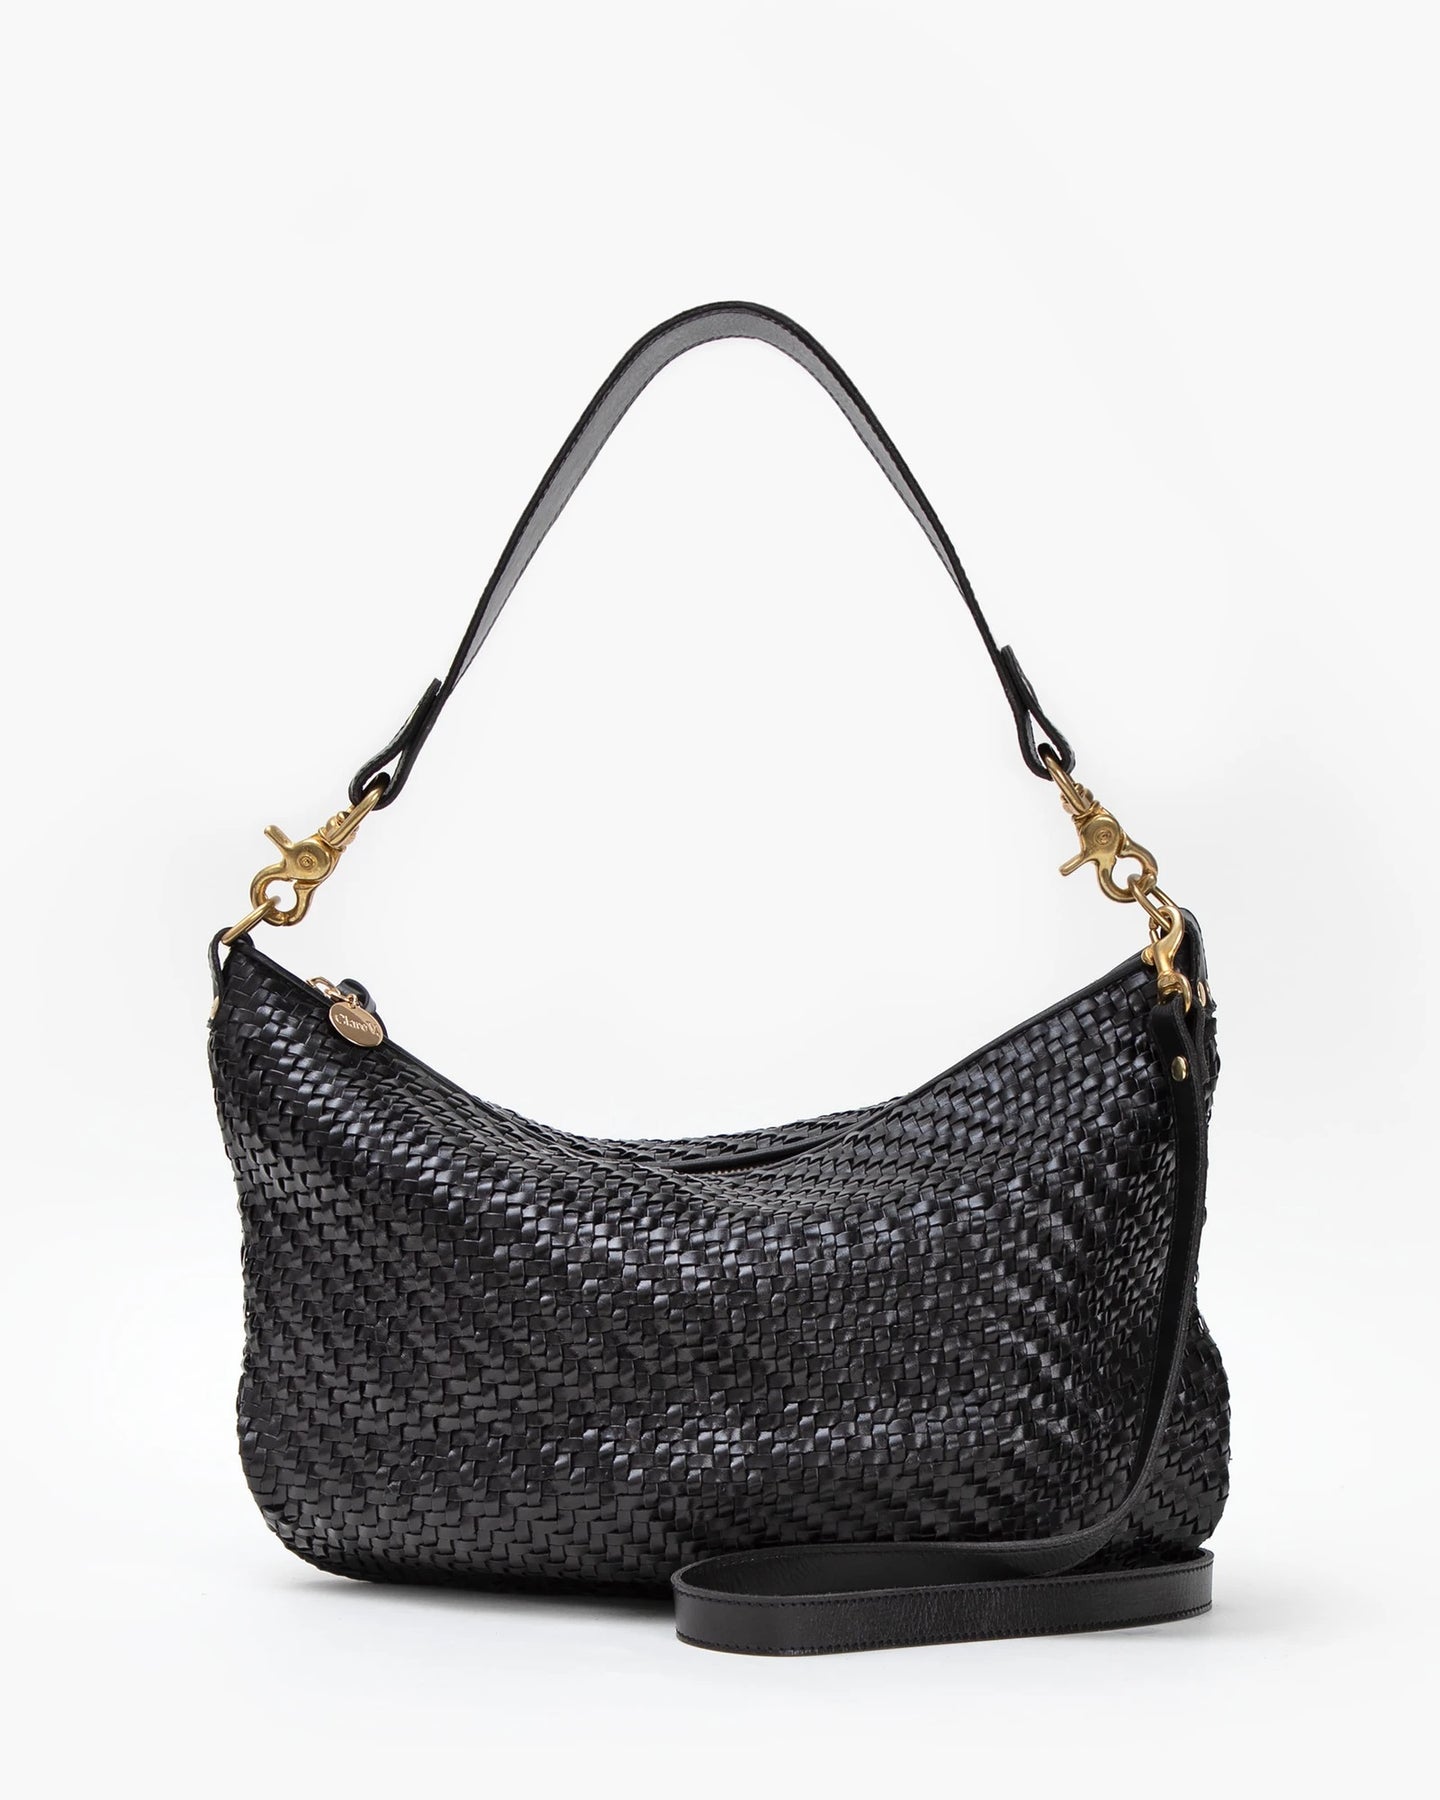 Clare V. Moyen Messenger Bag in Black/Natural Woven Checker